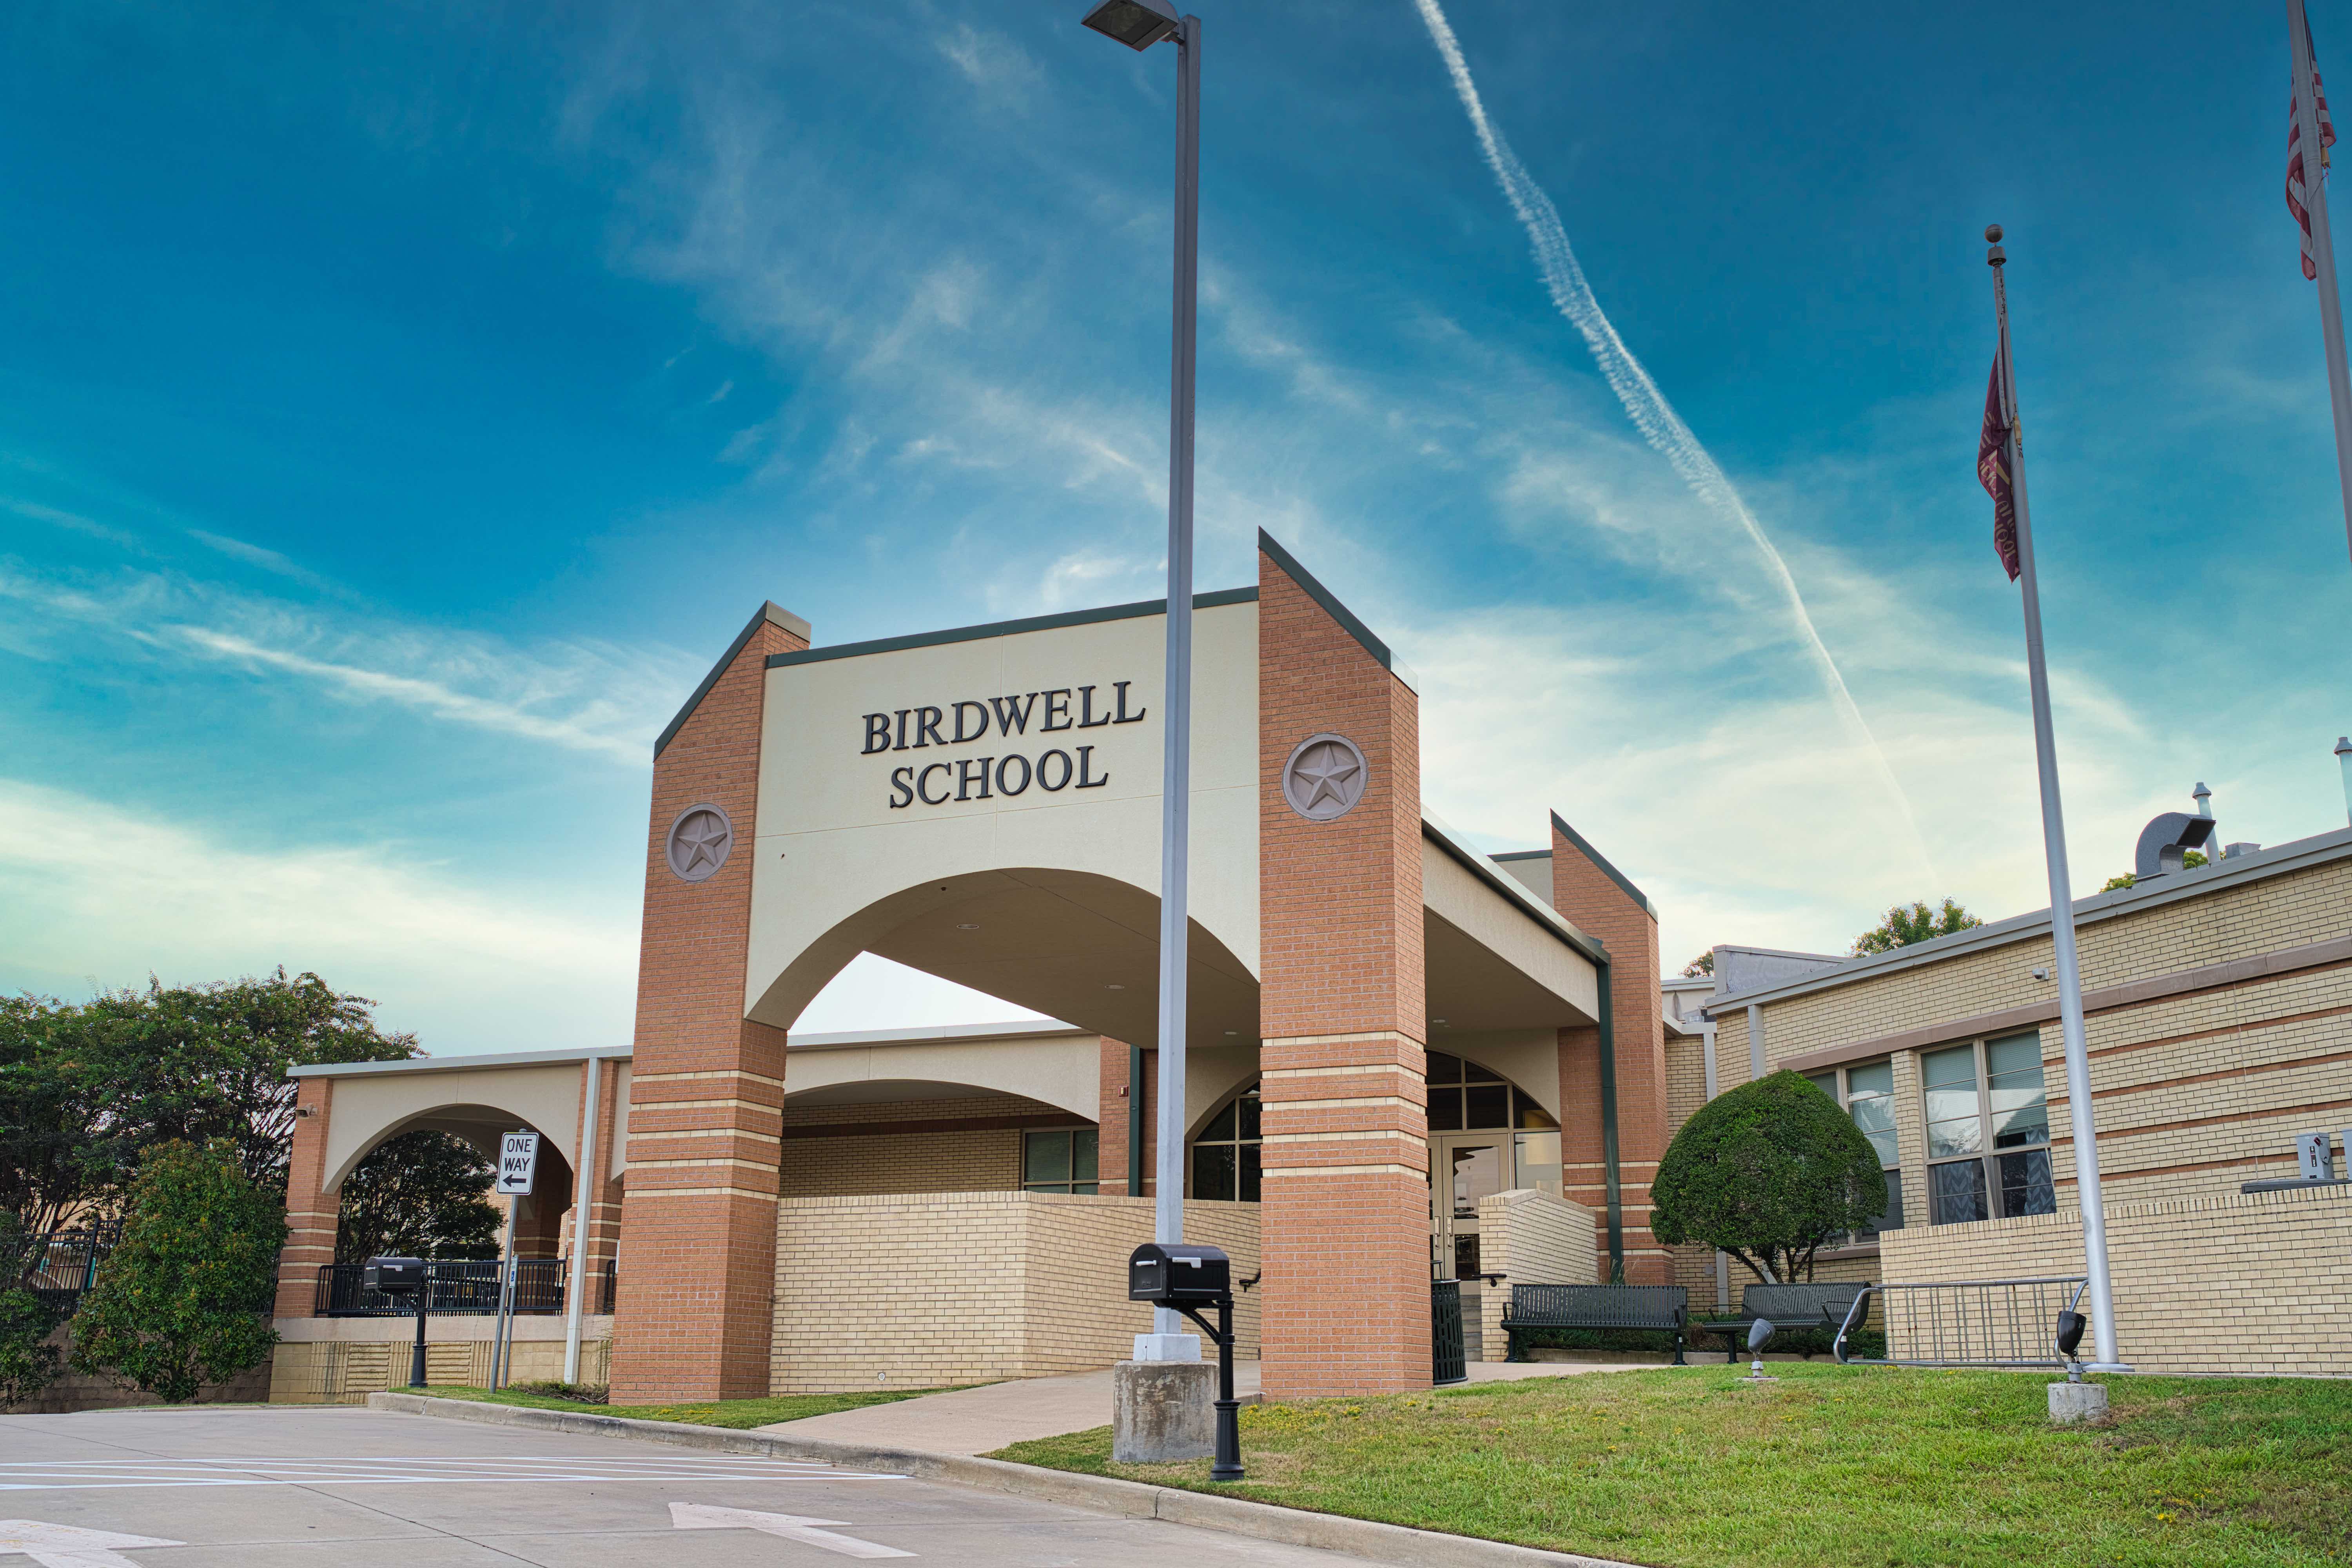 birdwell school front